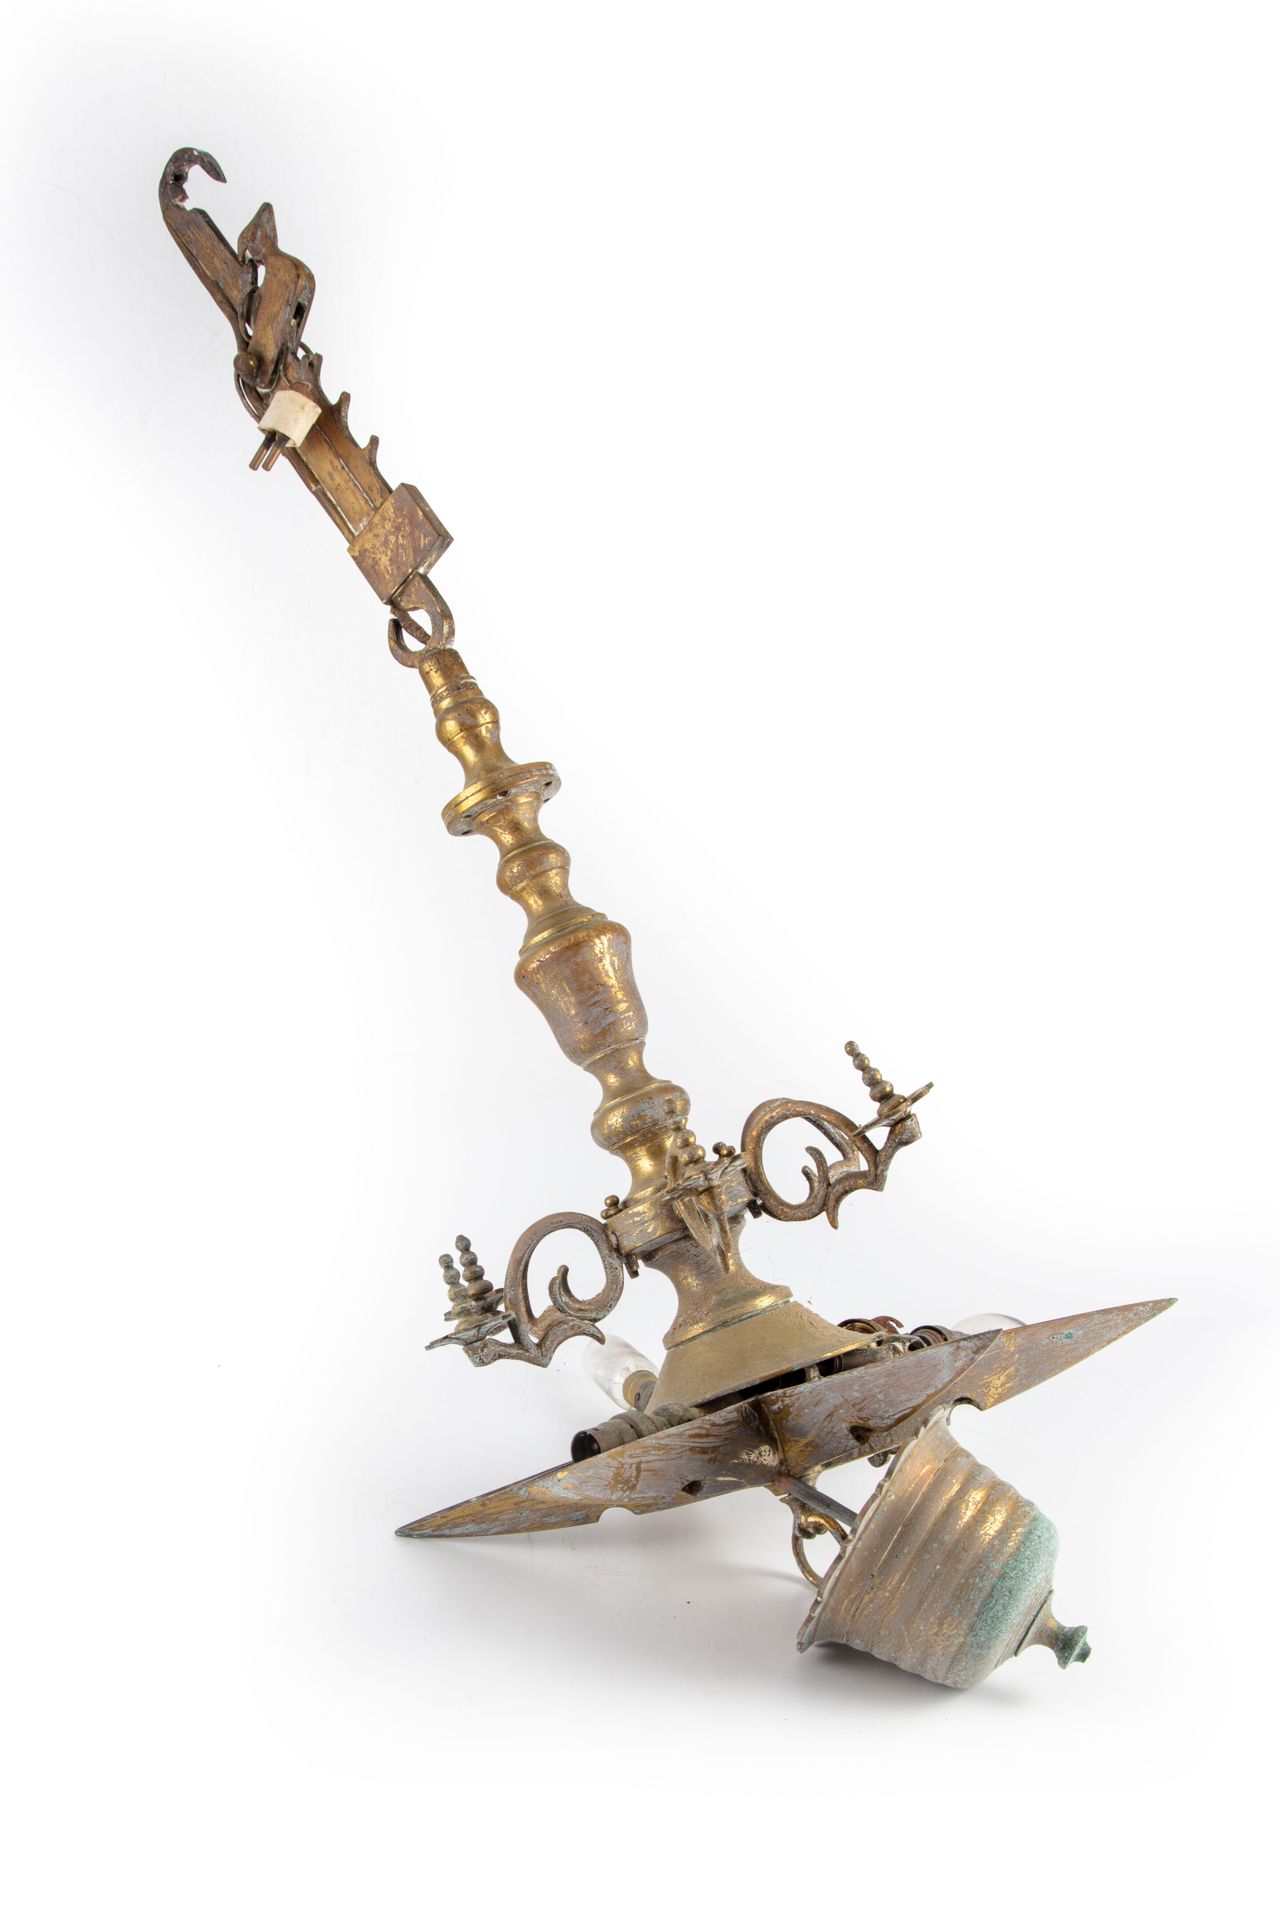 Null JUDAICA

Lampe de Shabbat de type judenstem en bronze, étoile à six branche&hellip;